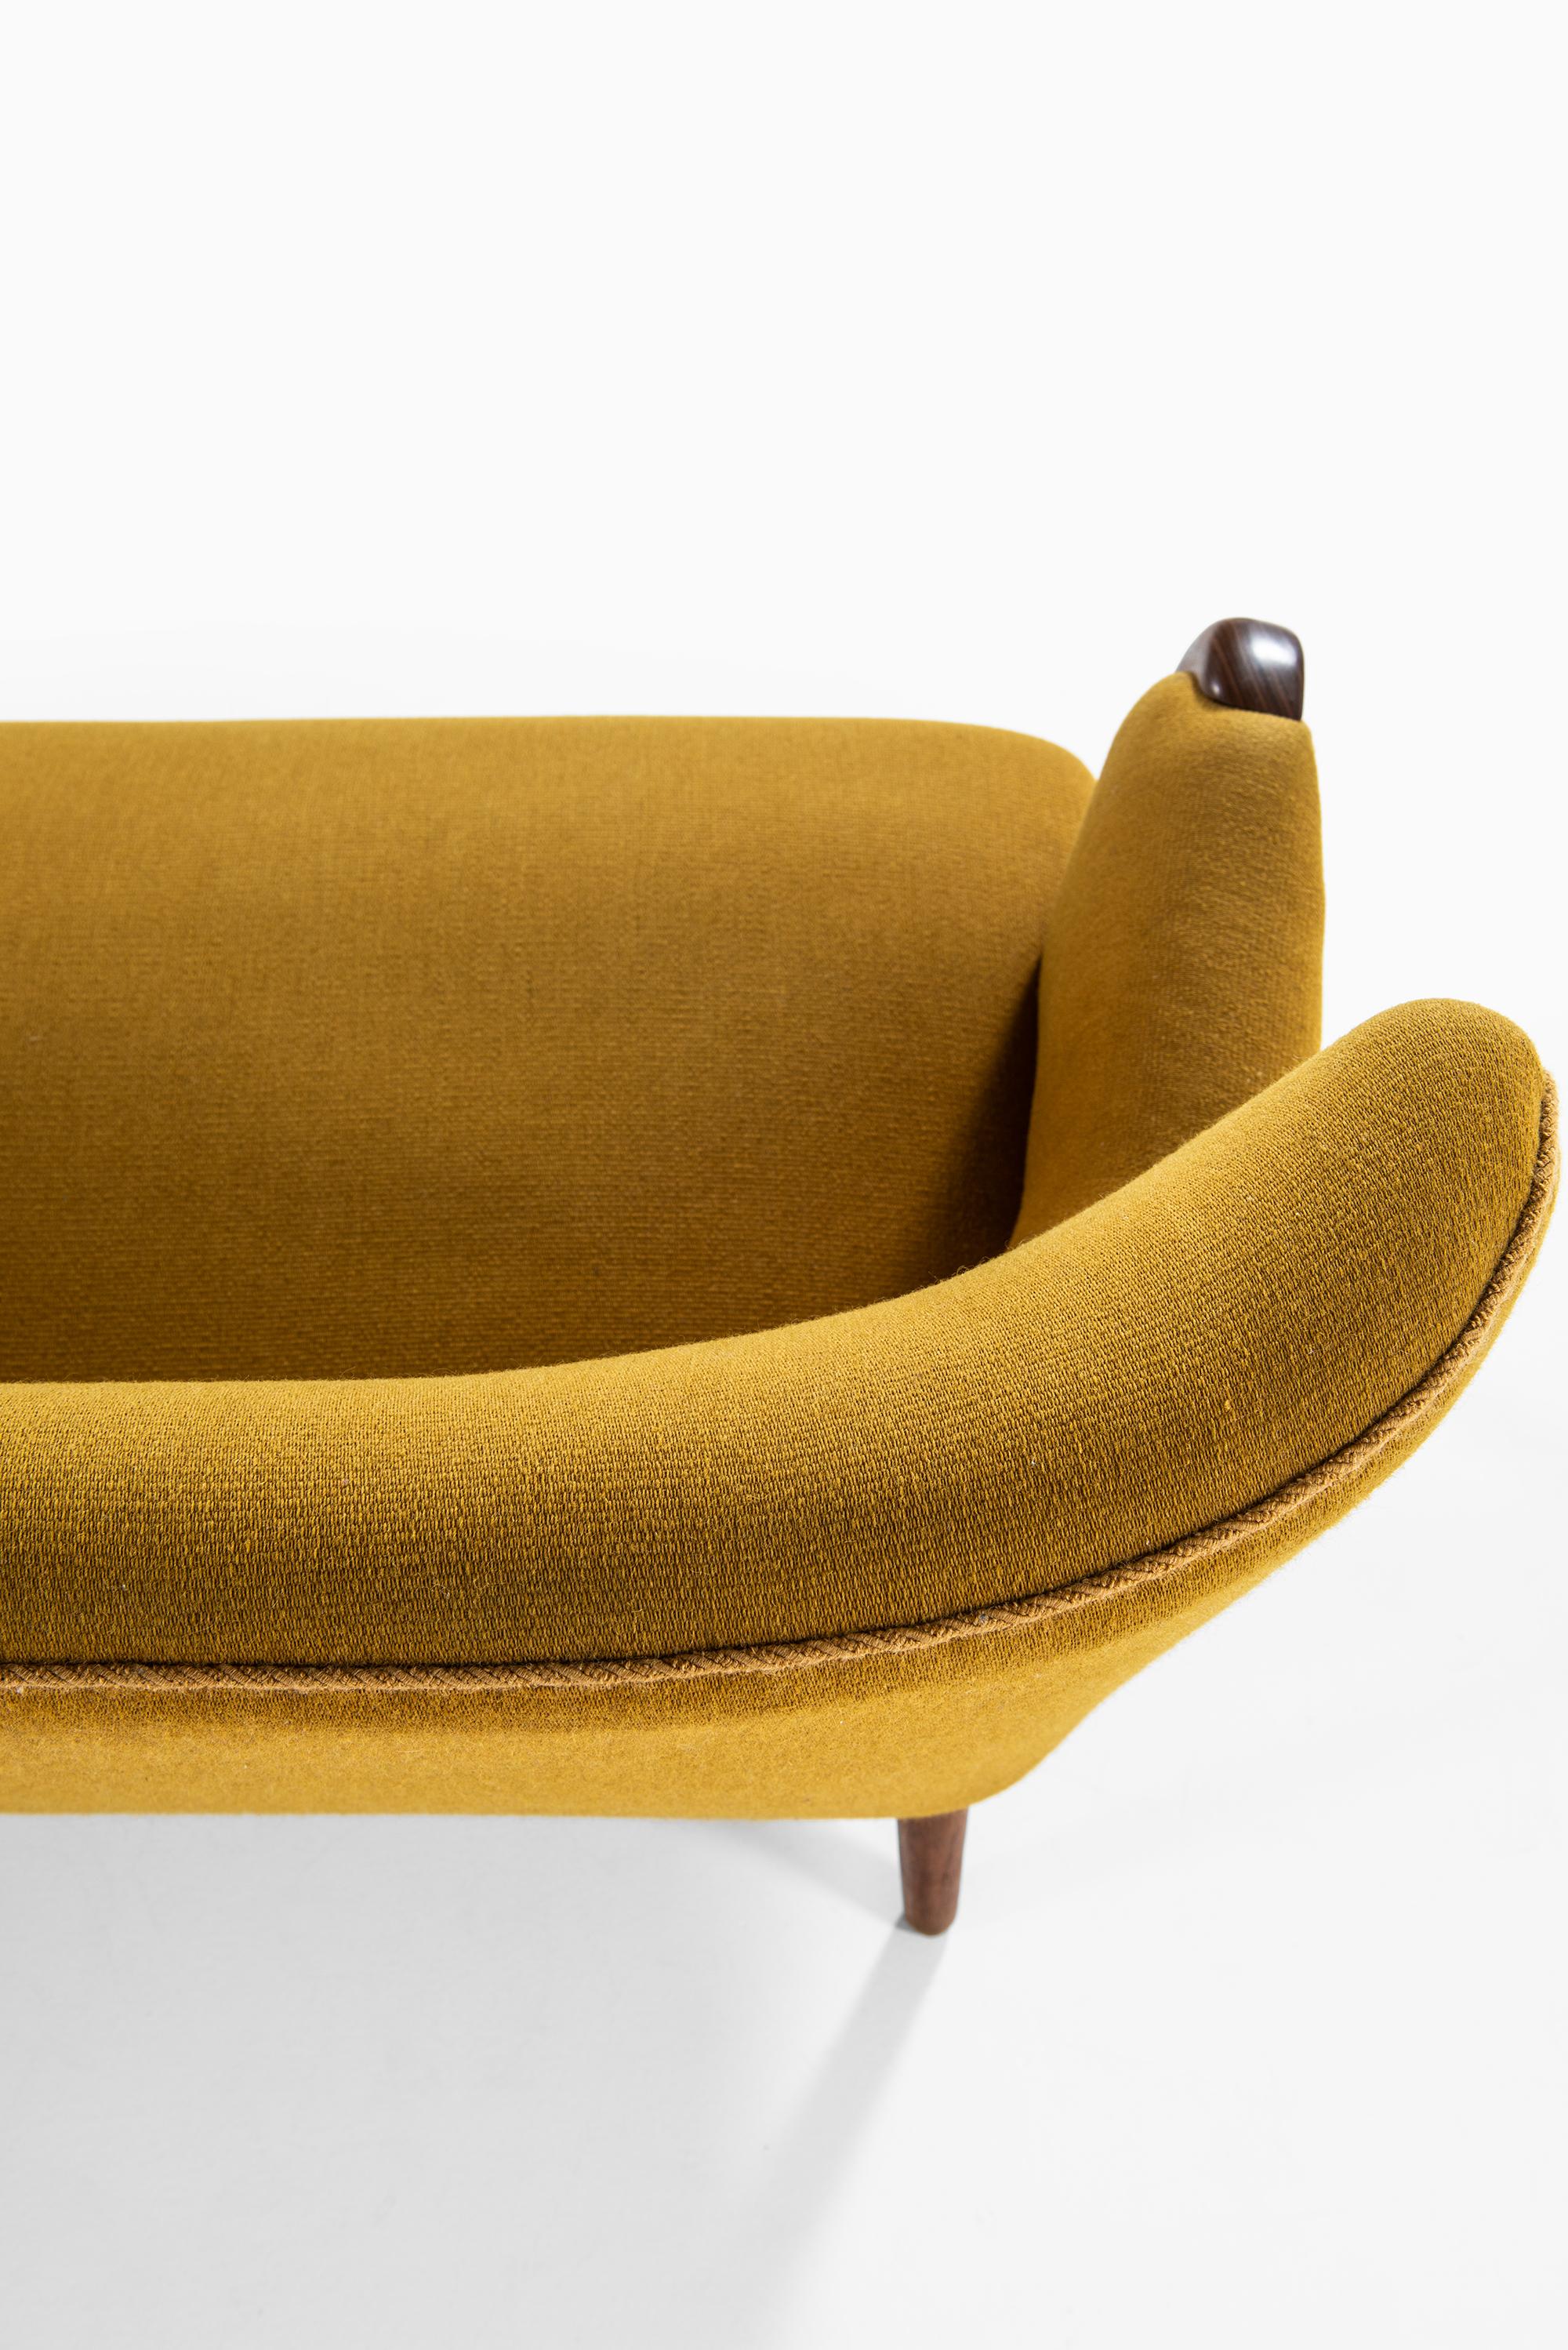 Scandinavian Modern Sofa Attributed to Kurt Olsen and Produced in Denmark